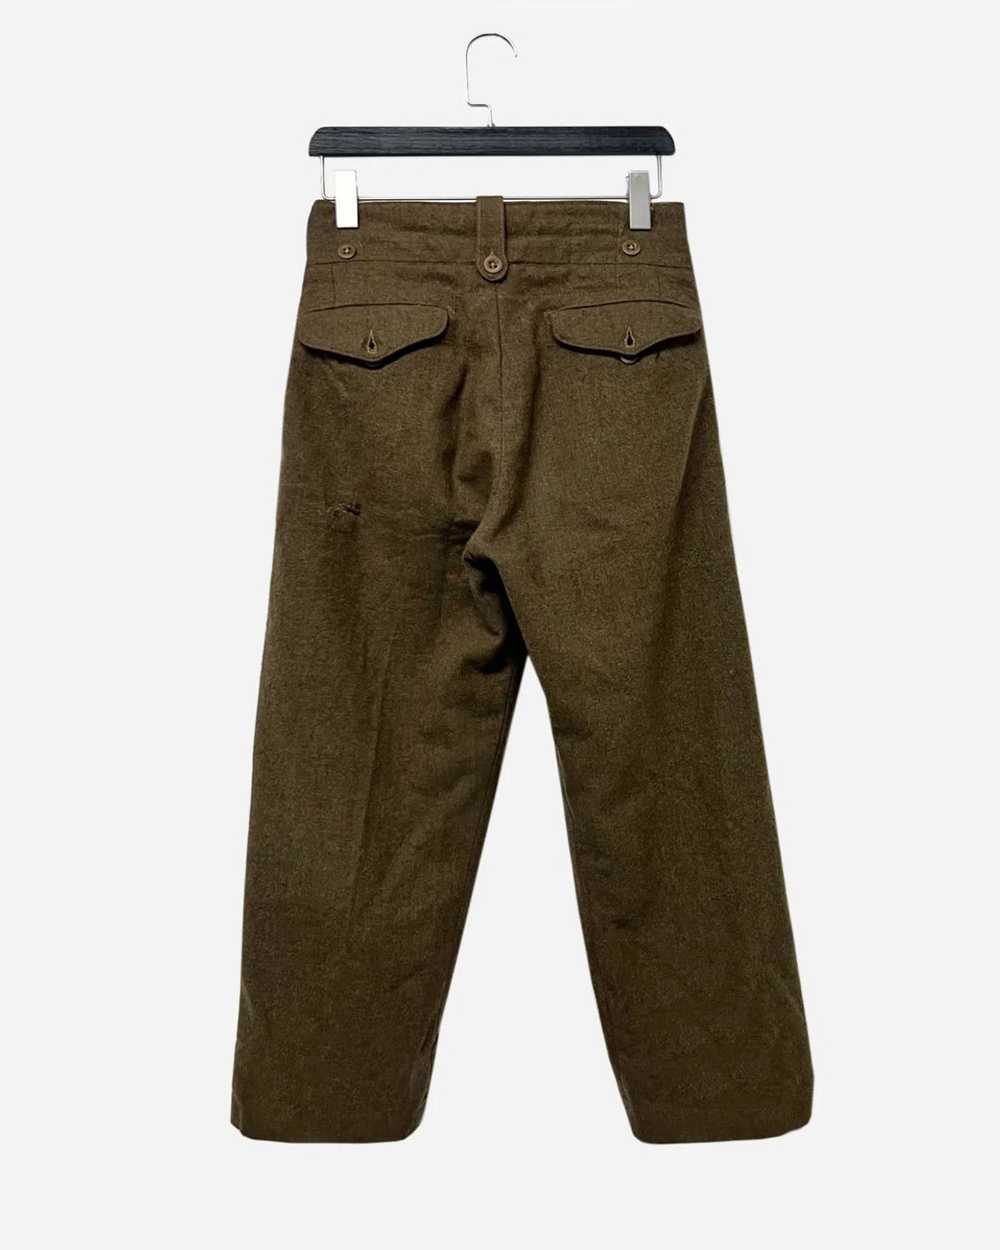 Military × Vintage vintage 1949 dress pants - image 2